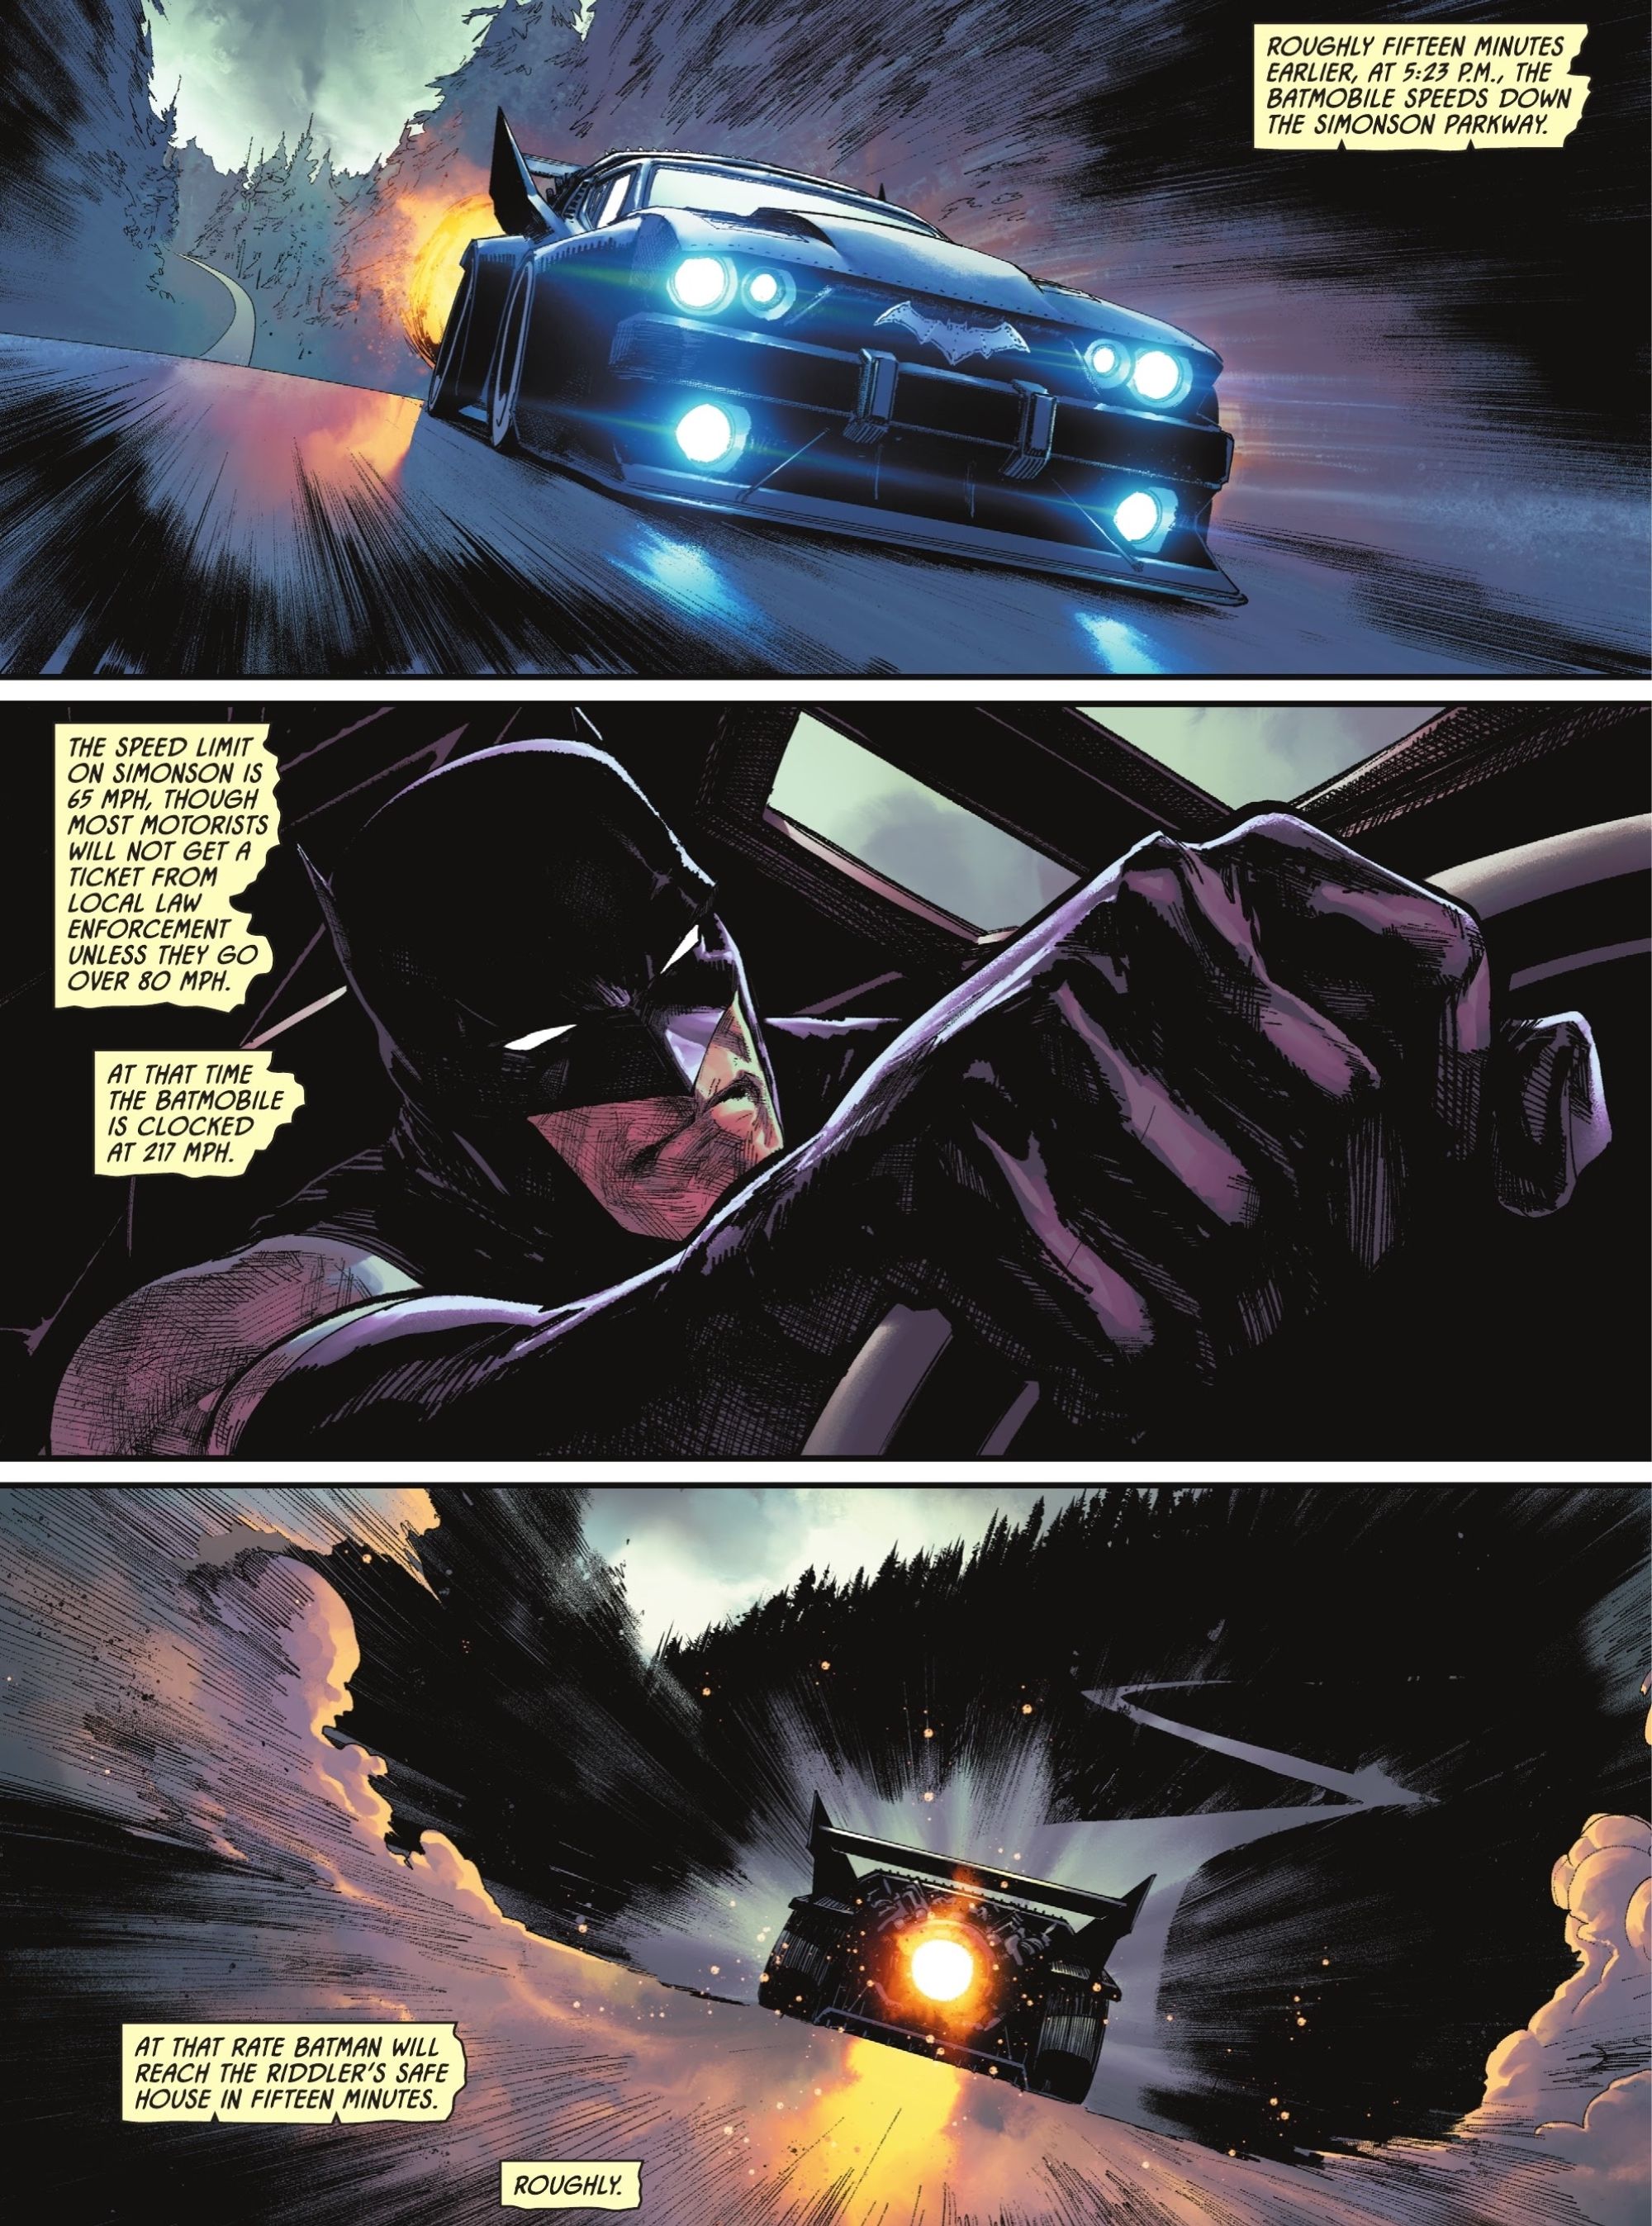 Batman Driving Epic Early Batmobile in Killing Time 2